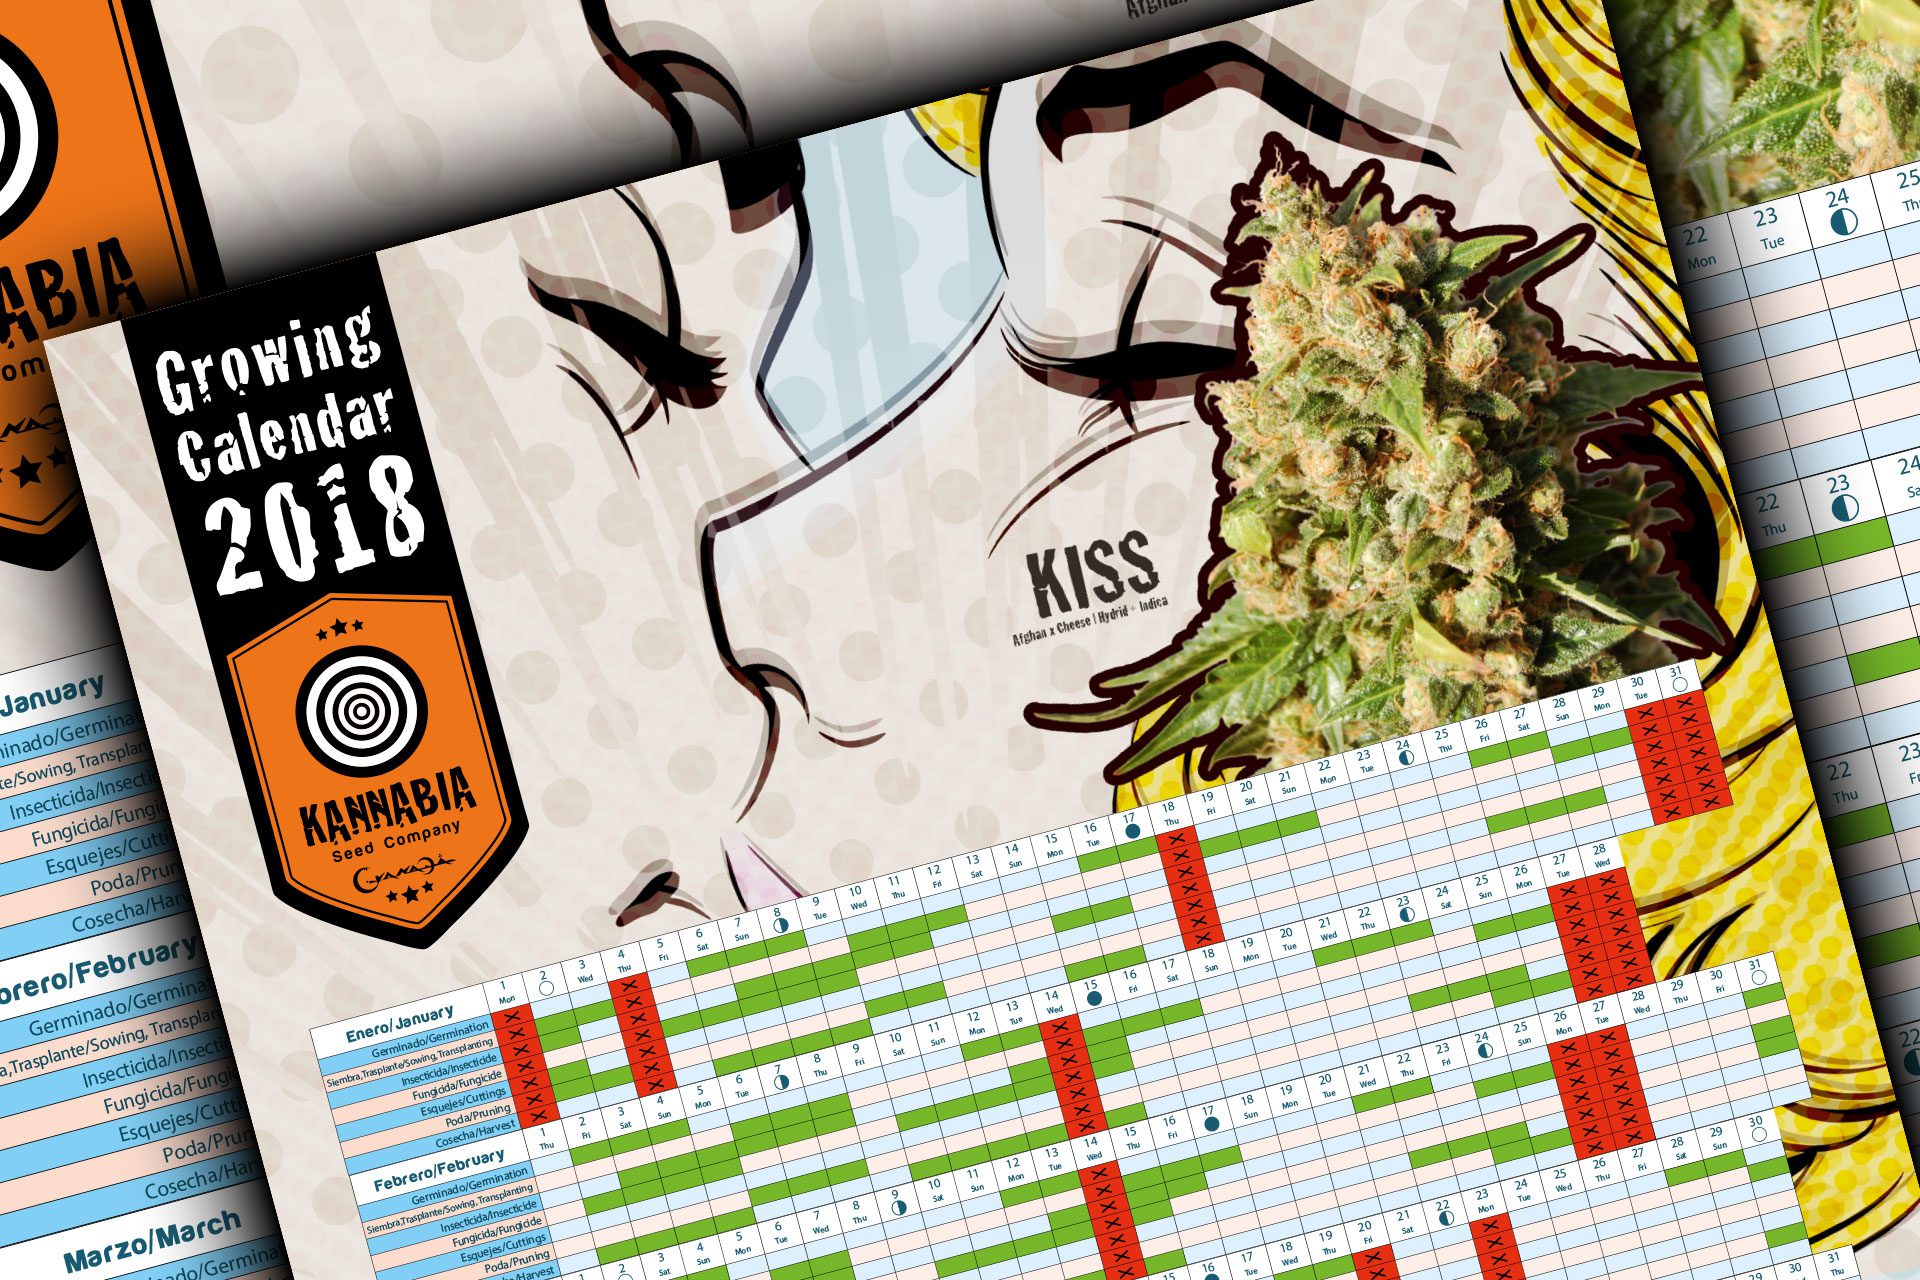 Cannabis growing calendar 2018